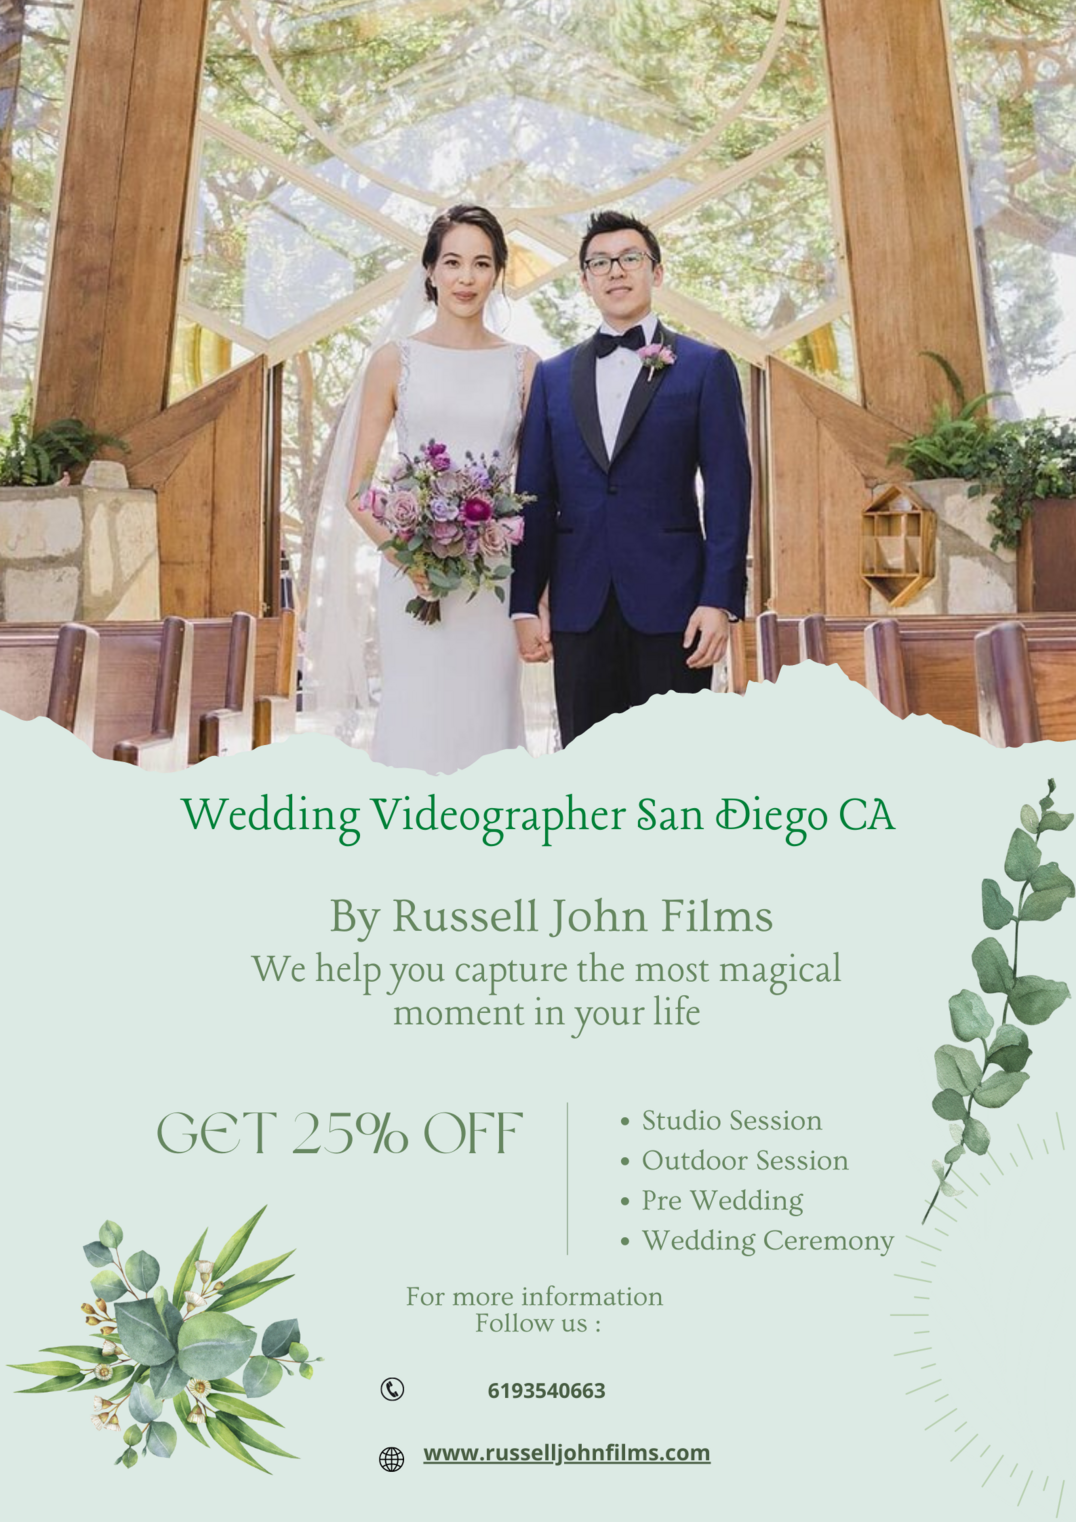 Russell John Films on Gab: 'Wedding Videographer S